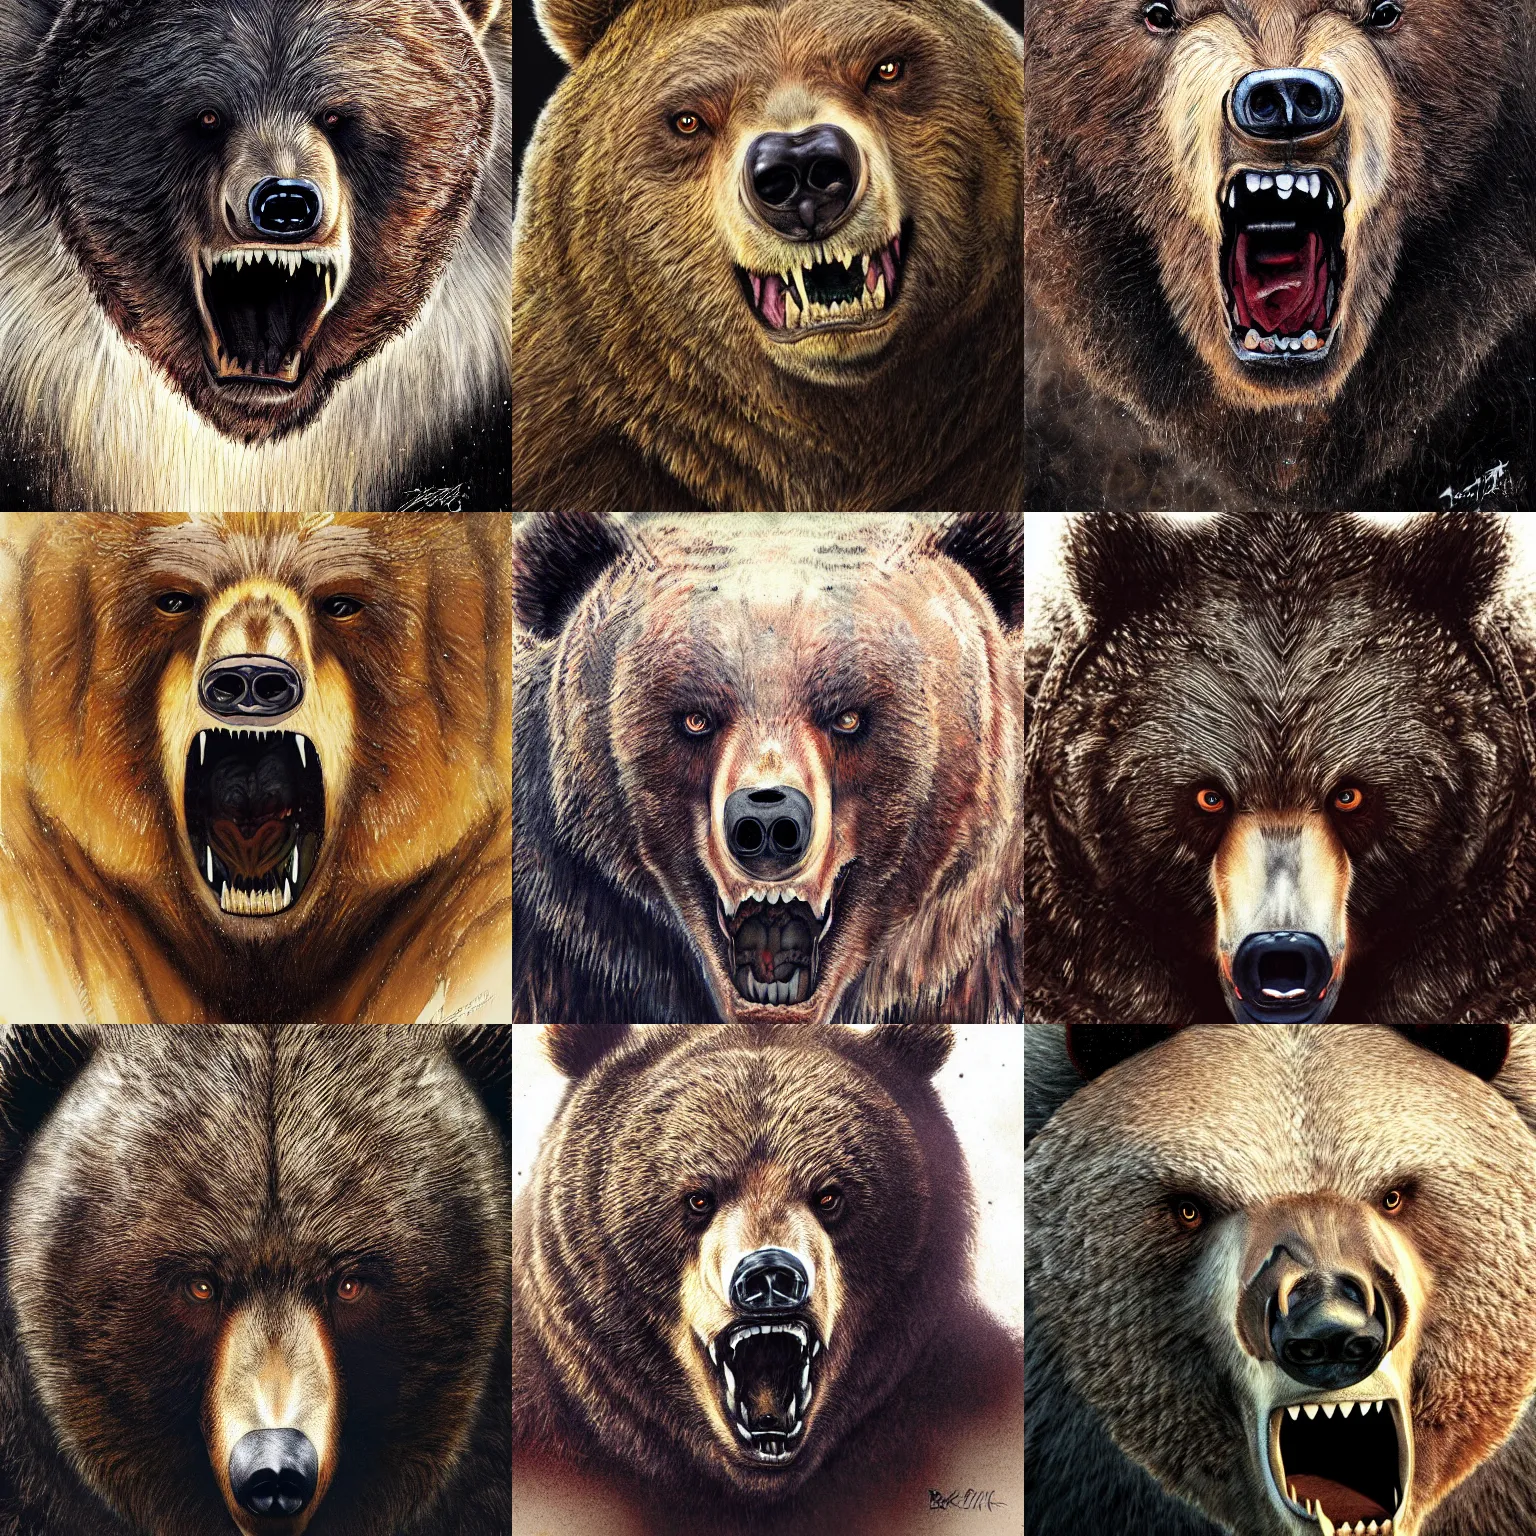 Prompt: portrait close - up of a growling angry bear, aleksi briclot, ruktowski